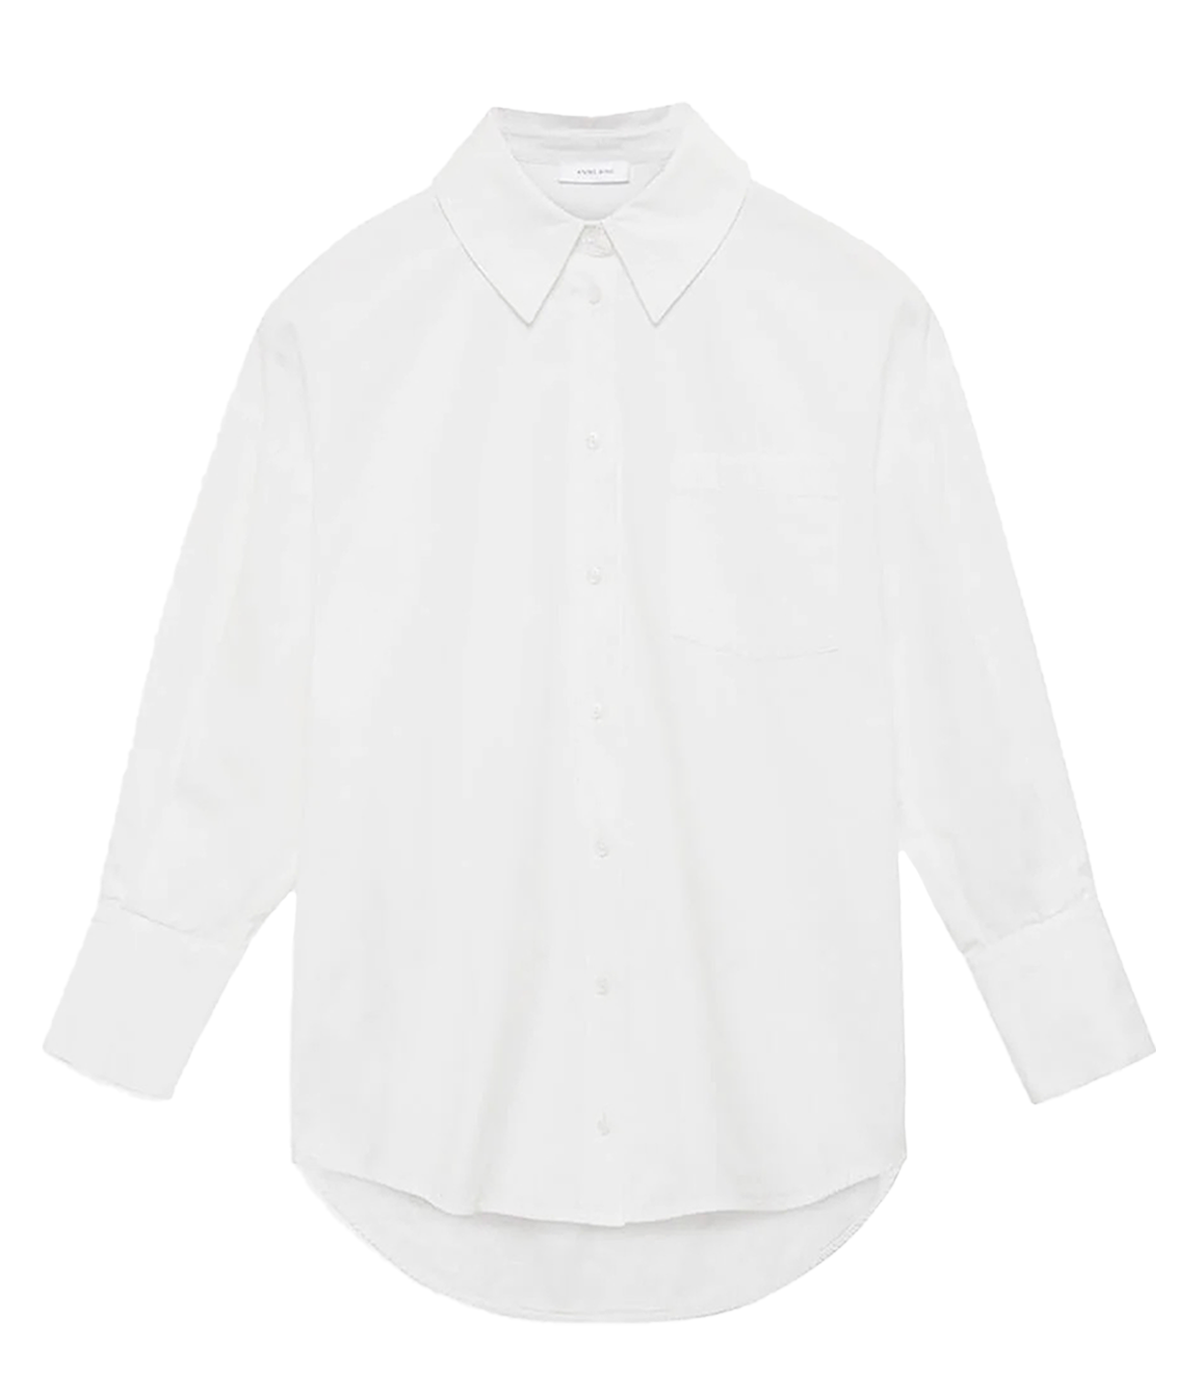 Mika Shirt in White